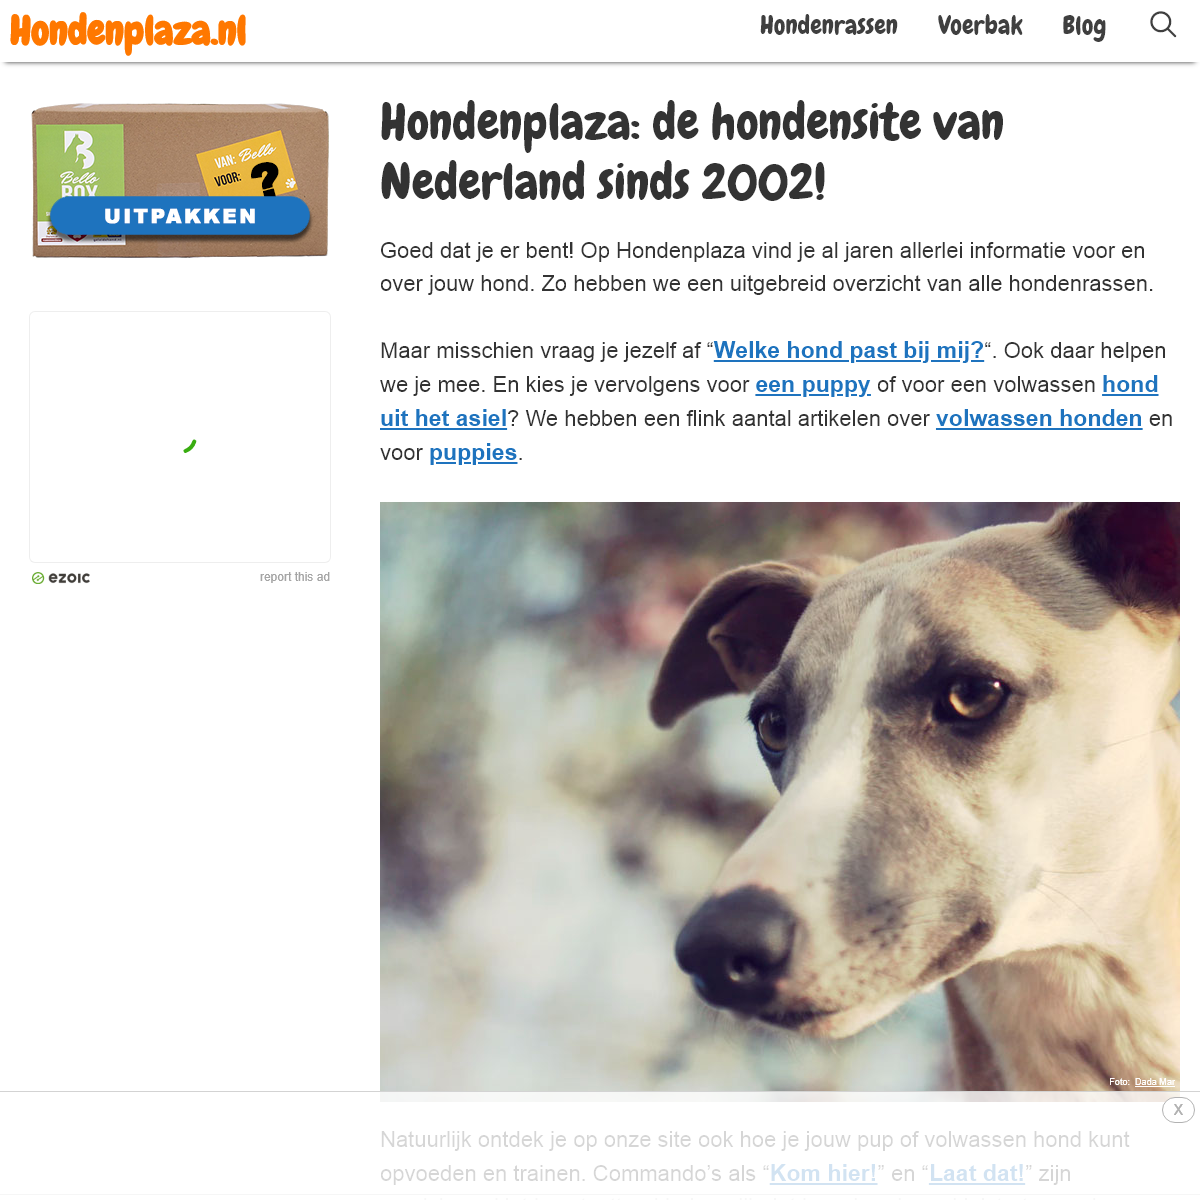 A complete backup of hondenplaza.nl